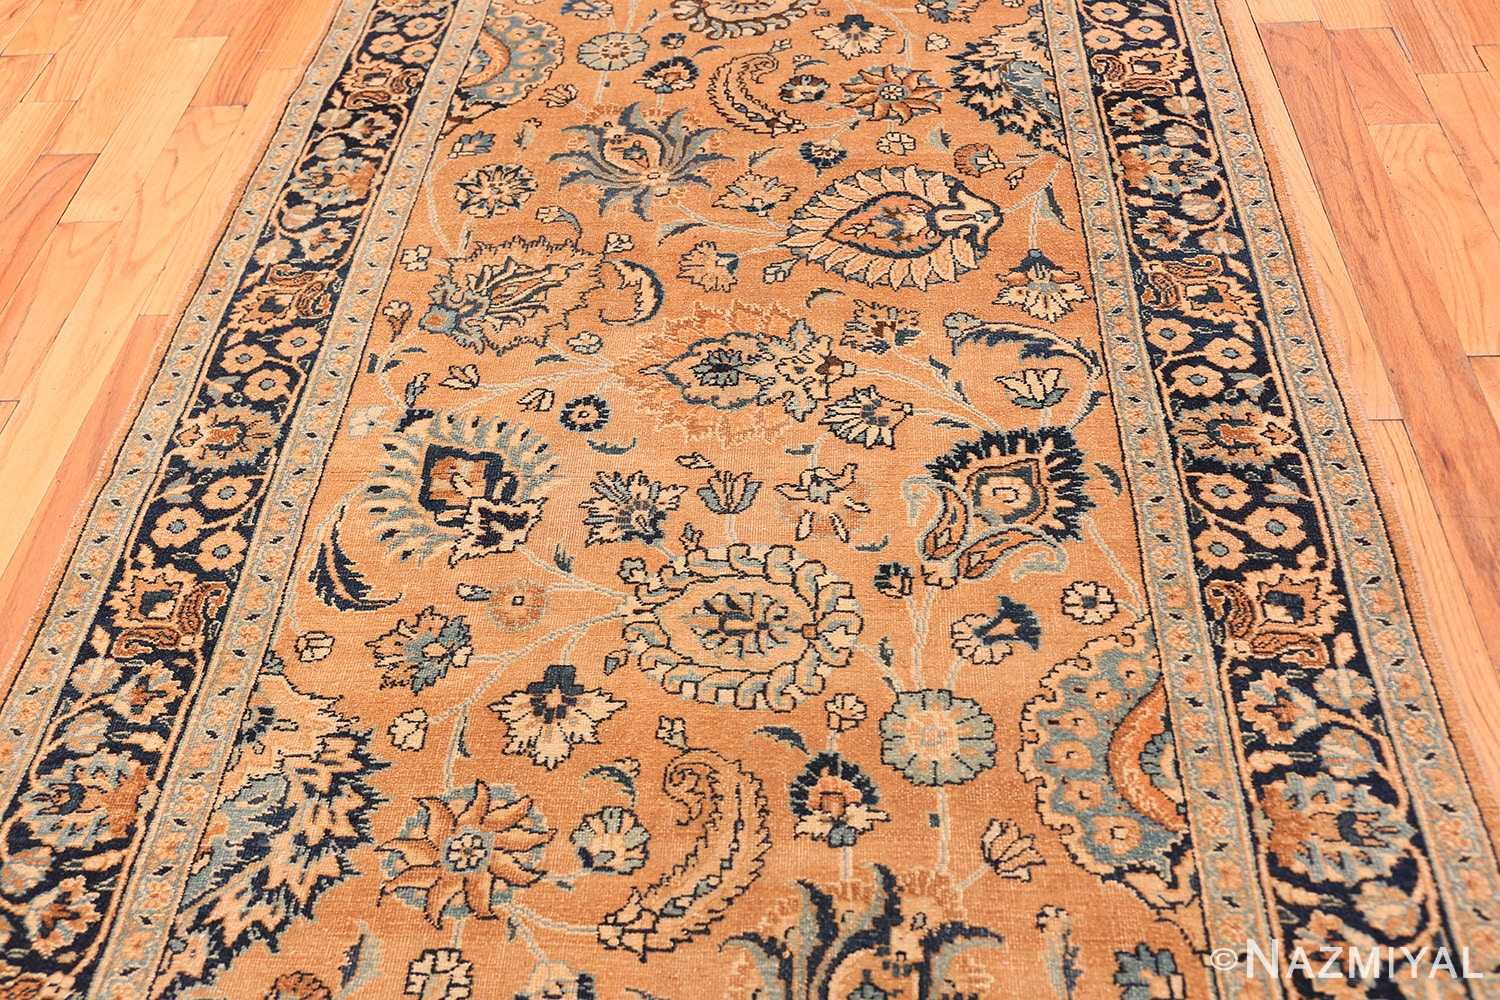 Field Antique Khorassan long runner rug 47219 by Nazmiyal